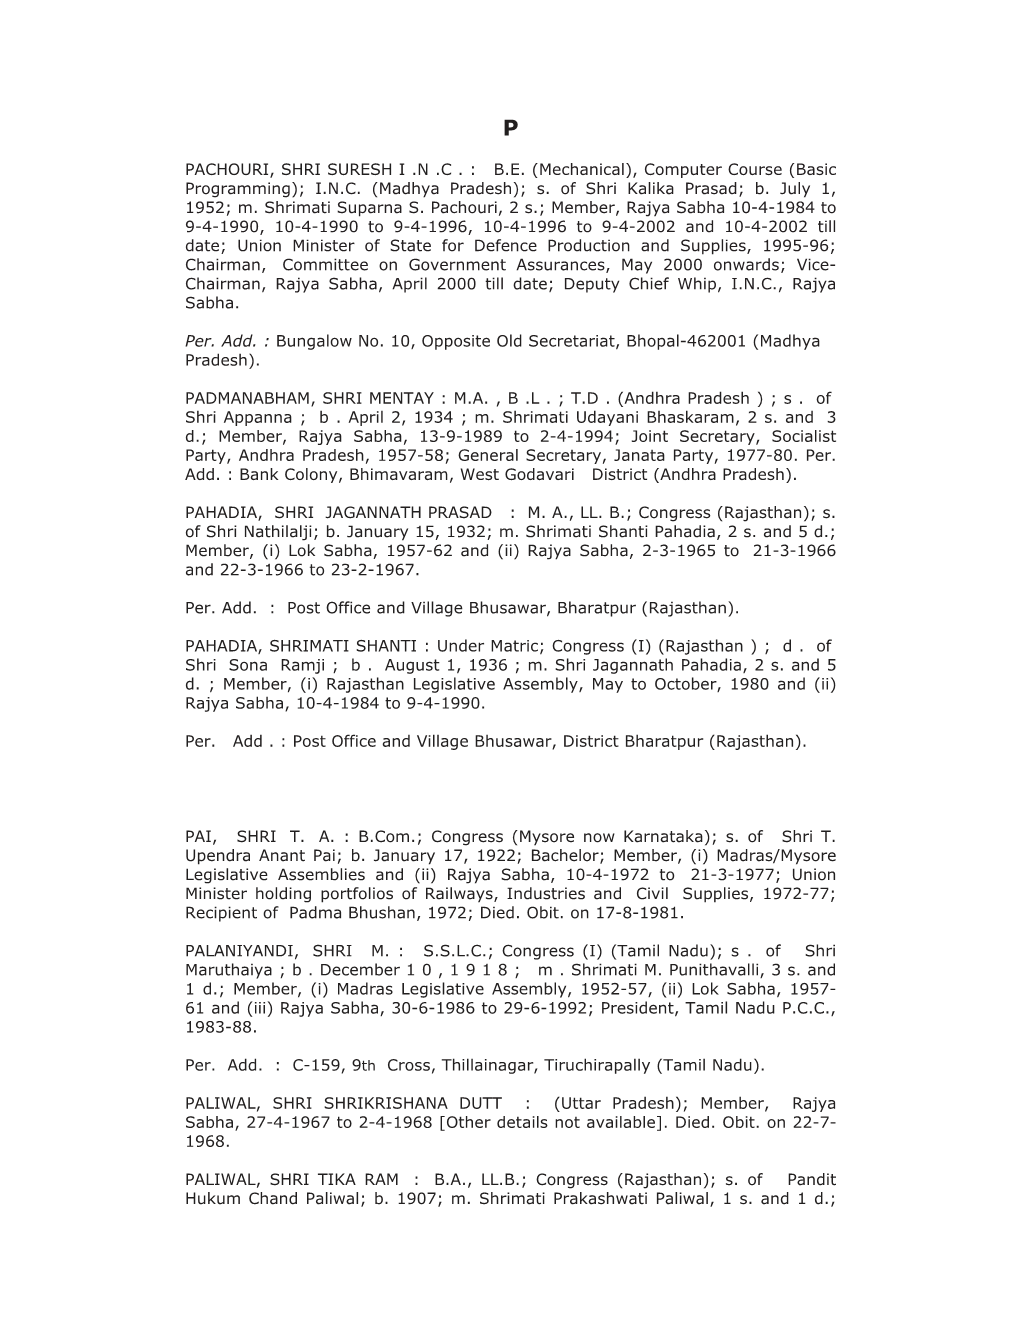 PACHOURI, SHRI SURESH I .N .C . : B.E. (Mechanical), Computer Course (Basic Programming); I.N.C. (Madhya Pradesh); S. of Shri Kalika Prasad; B